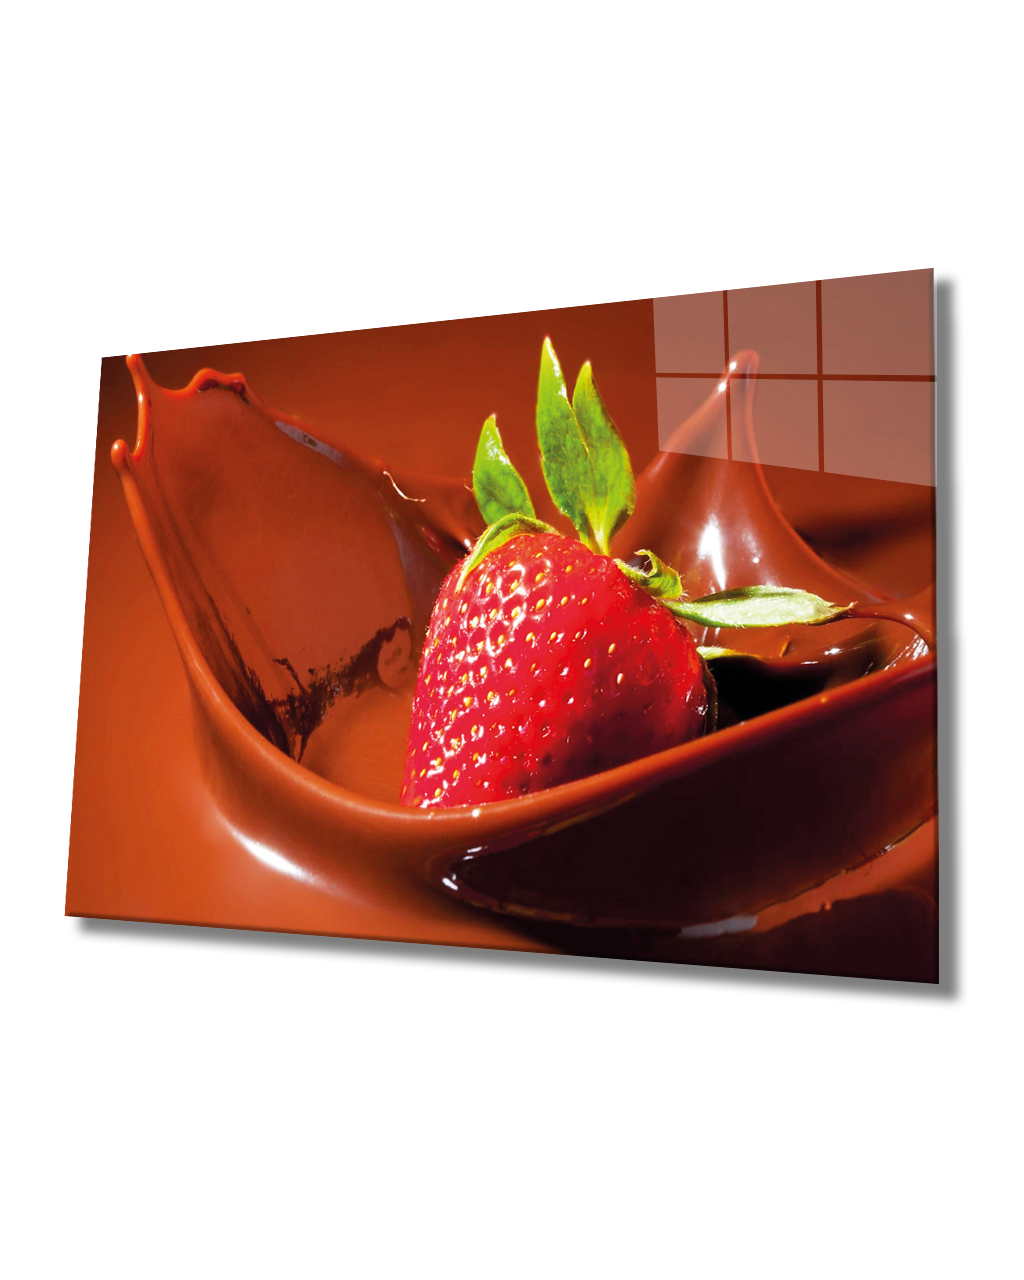 Çikolatalı ve Çilek Cam Tablo  4mm Dayanıklı Temperli Cam, Choclate and Strawberry Glass Wall Hanging